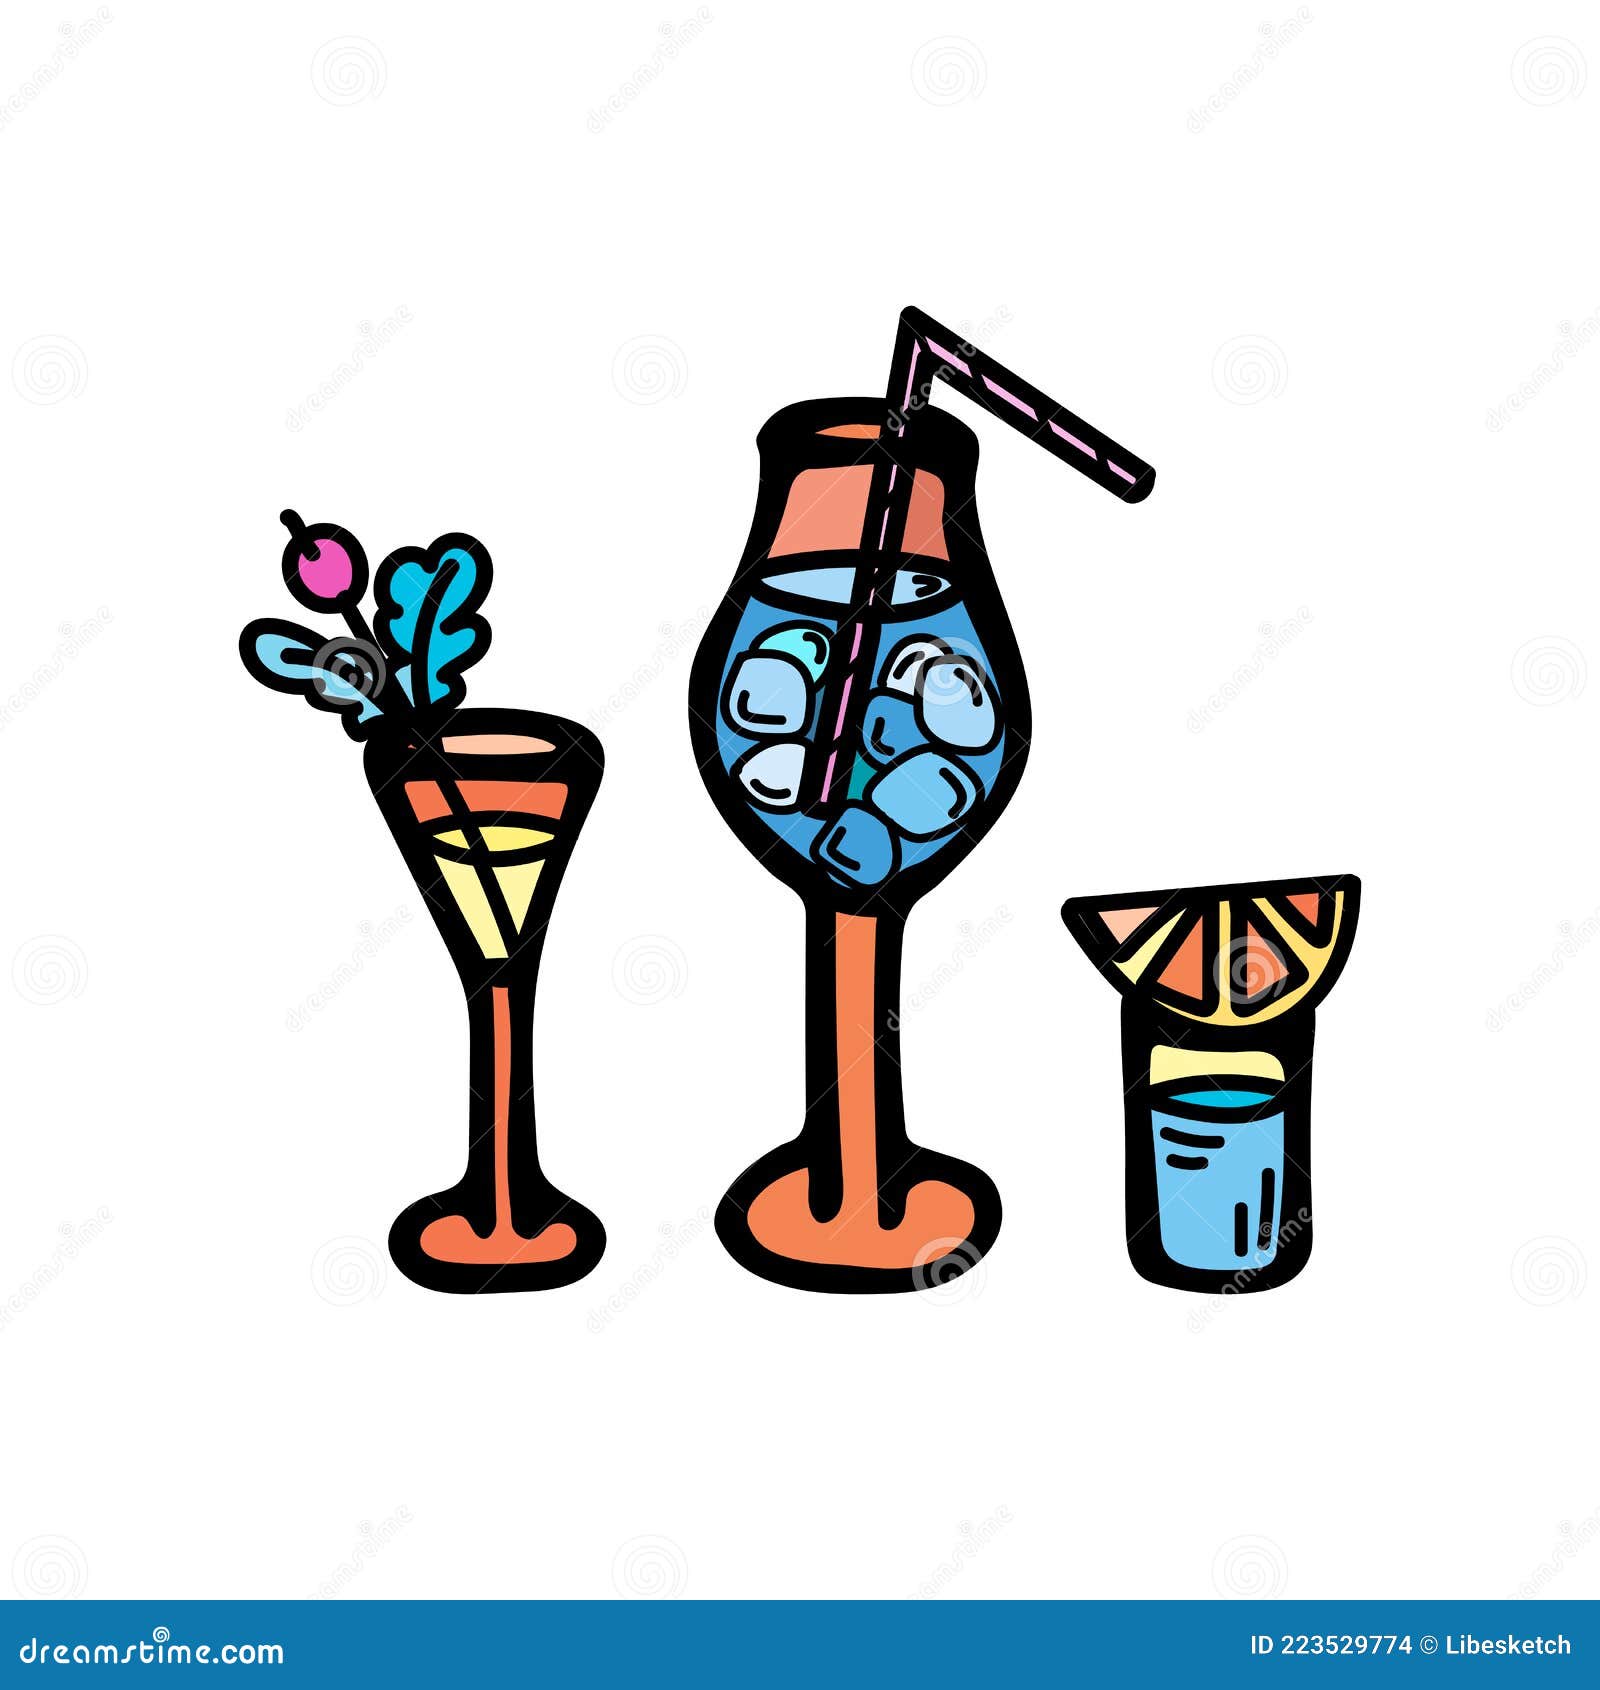 https://thumbs.dreamstime.com/z/set-color-vector-illustrations-glasses-cocktails-tubule-berries-orange-lettering-bar-icon-club-logo-website-party-223529774.jpg